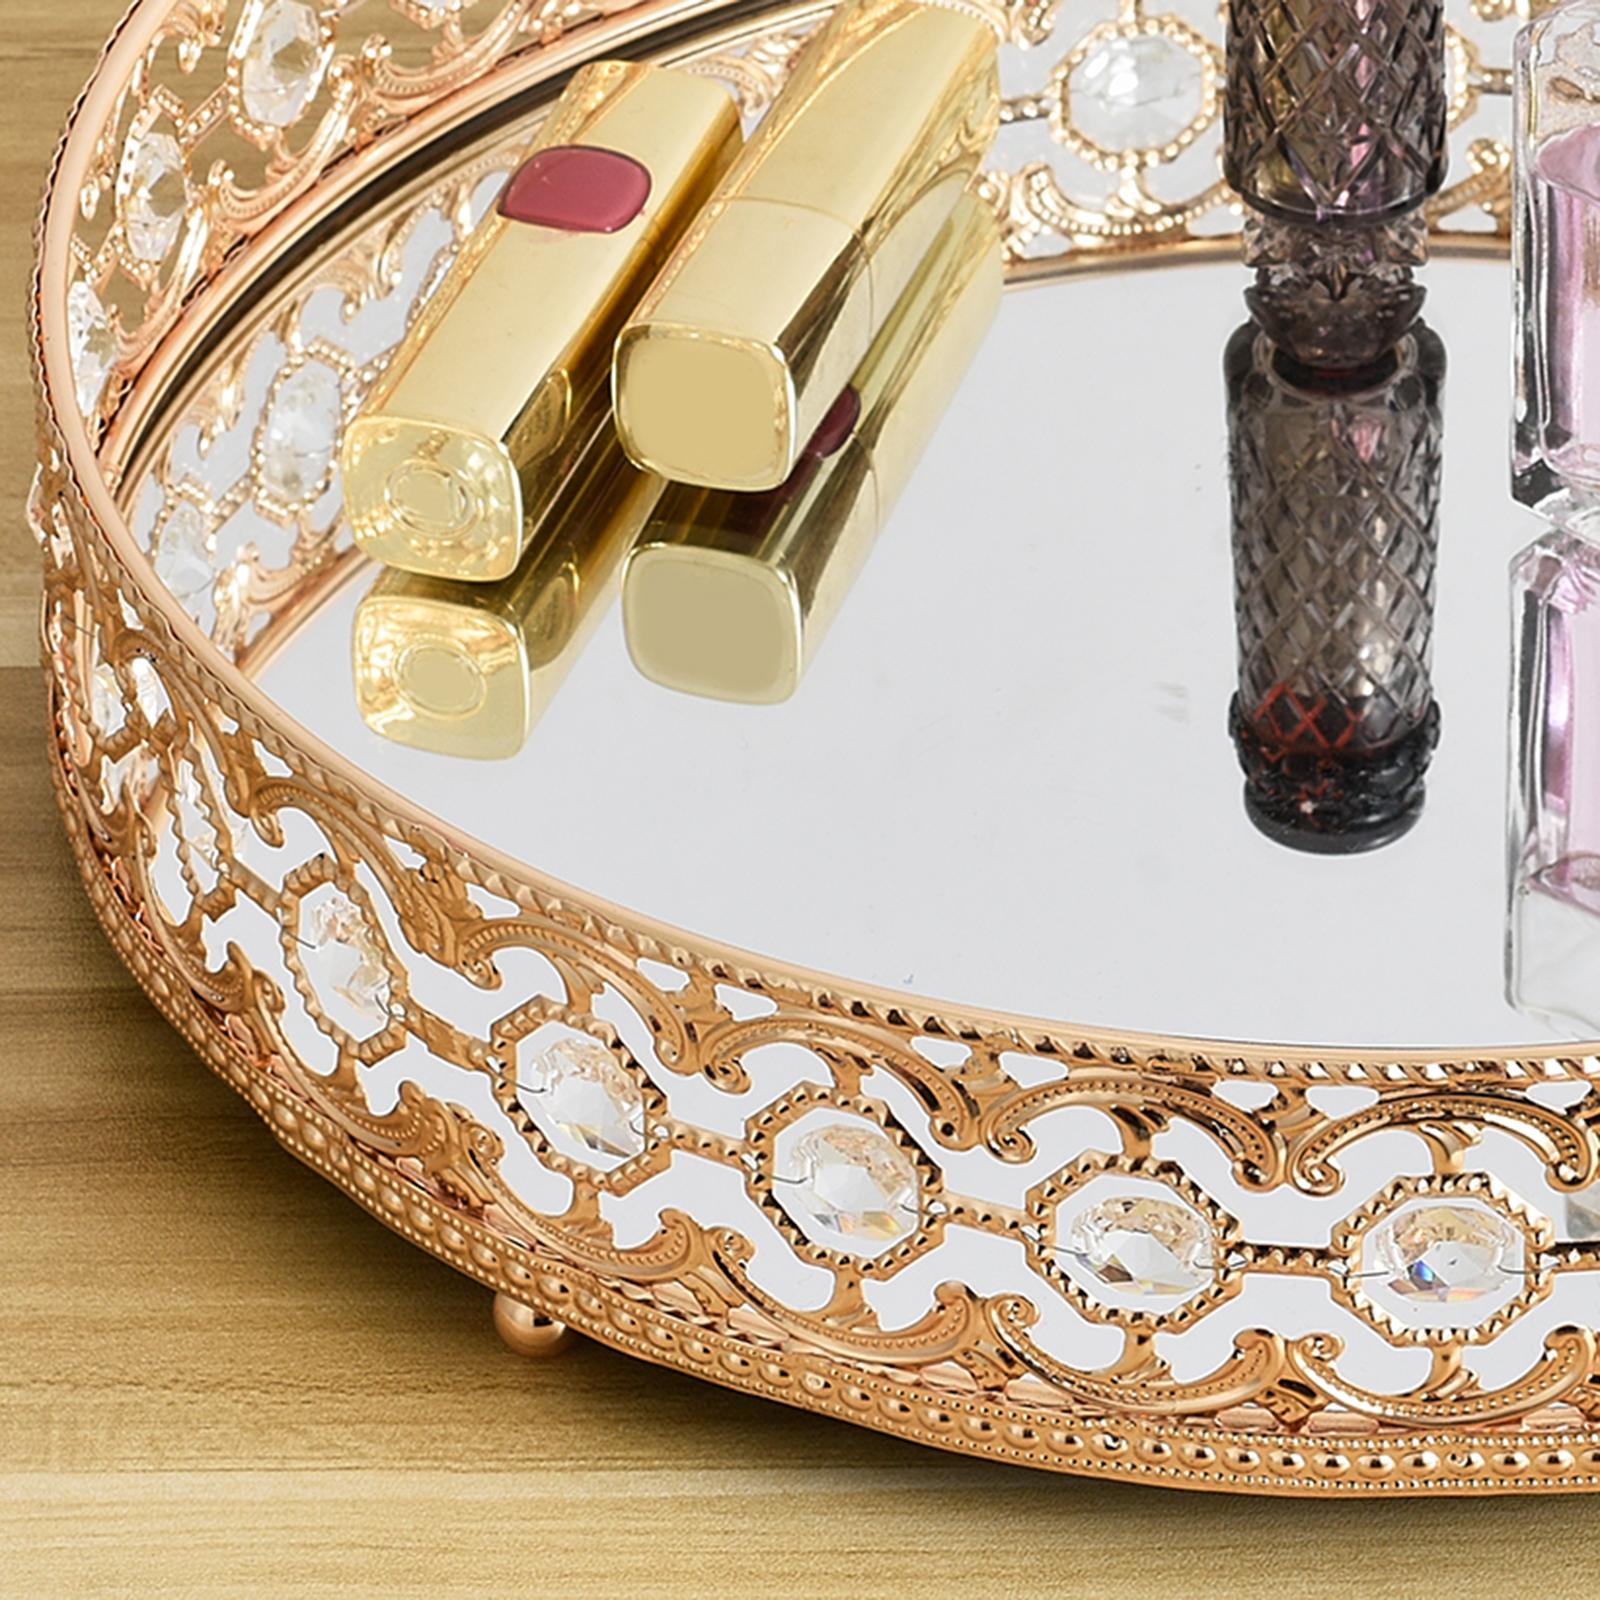 Crystal Cosmetic Makeup Tray Jewelry Trinket Organizer Vanity Tray Mirror Decorative Tray Perfume Skin Care Storage Home Dresser Table Decor, 10 Inch